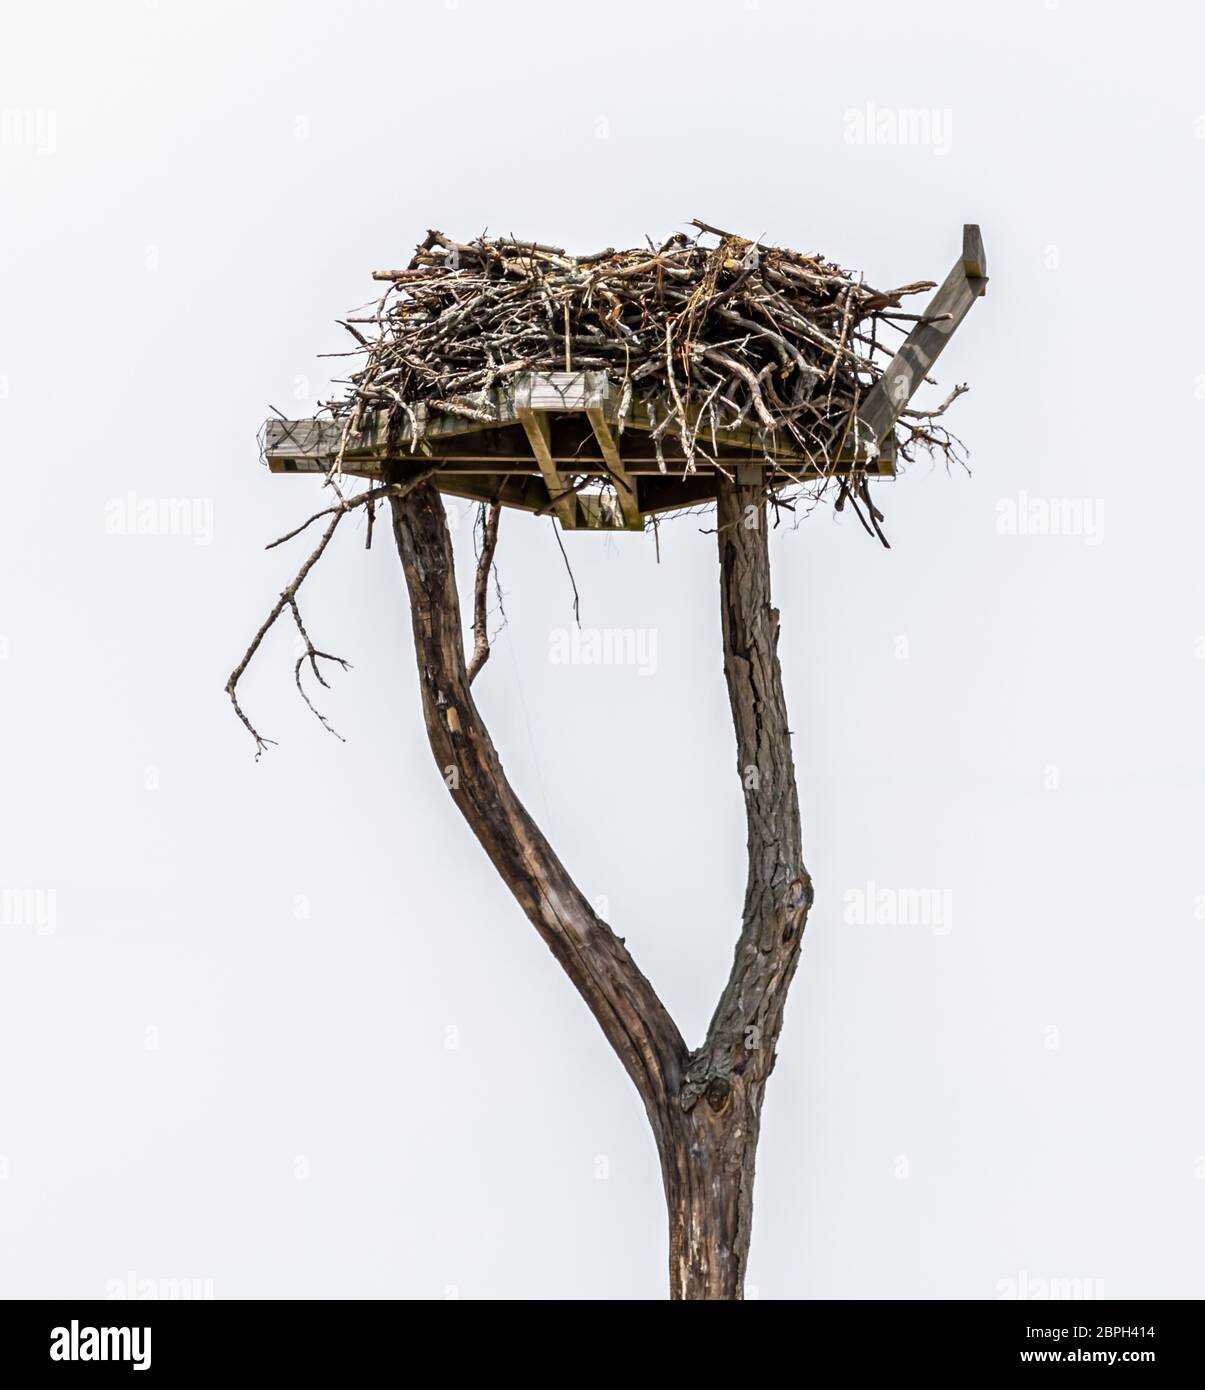 Osprey nest on a platform against a white background, Shelter Island, NY Stock Photo